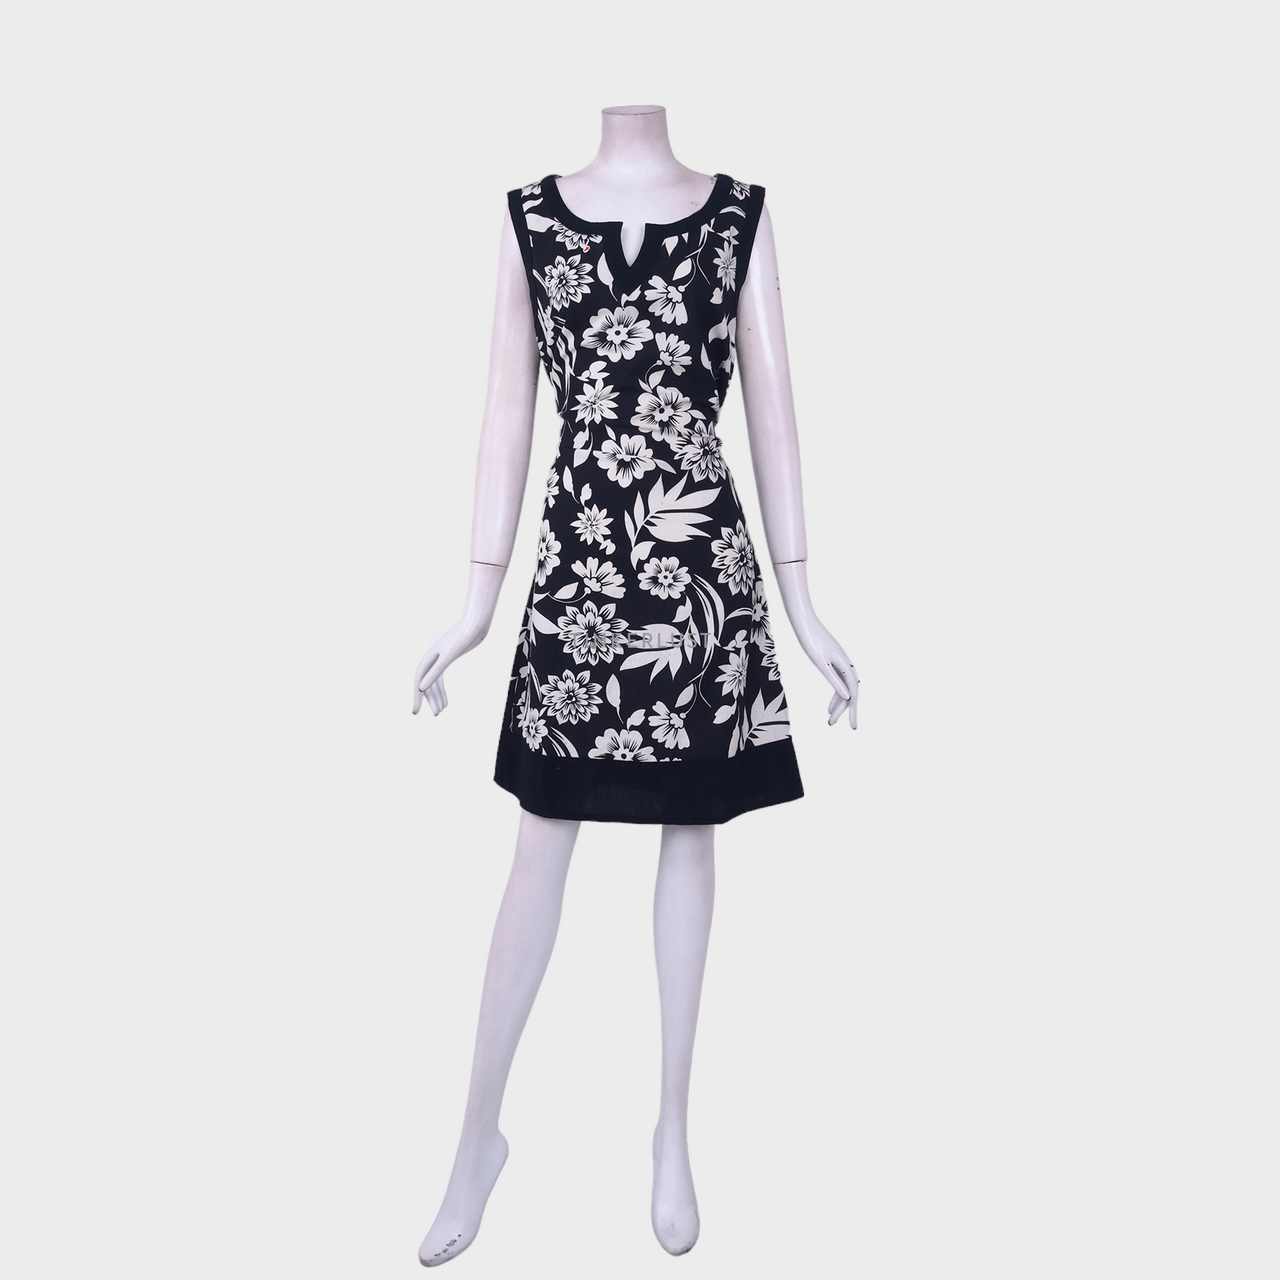 Debenhams Black & White Mini Dress